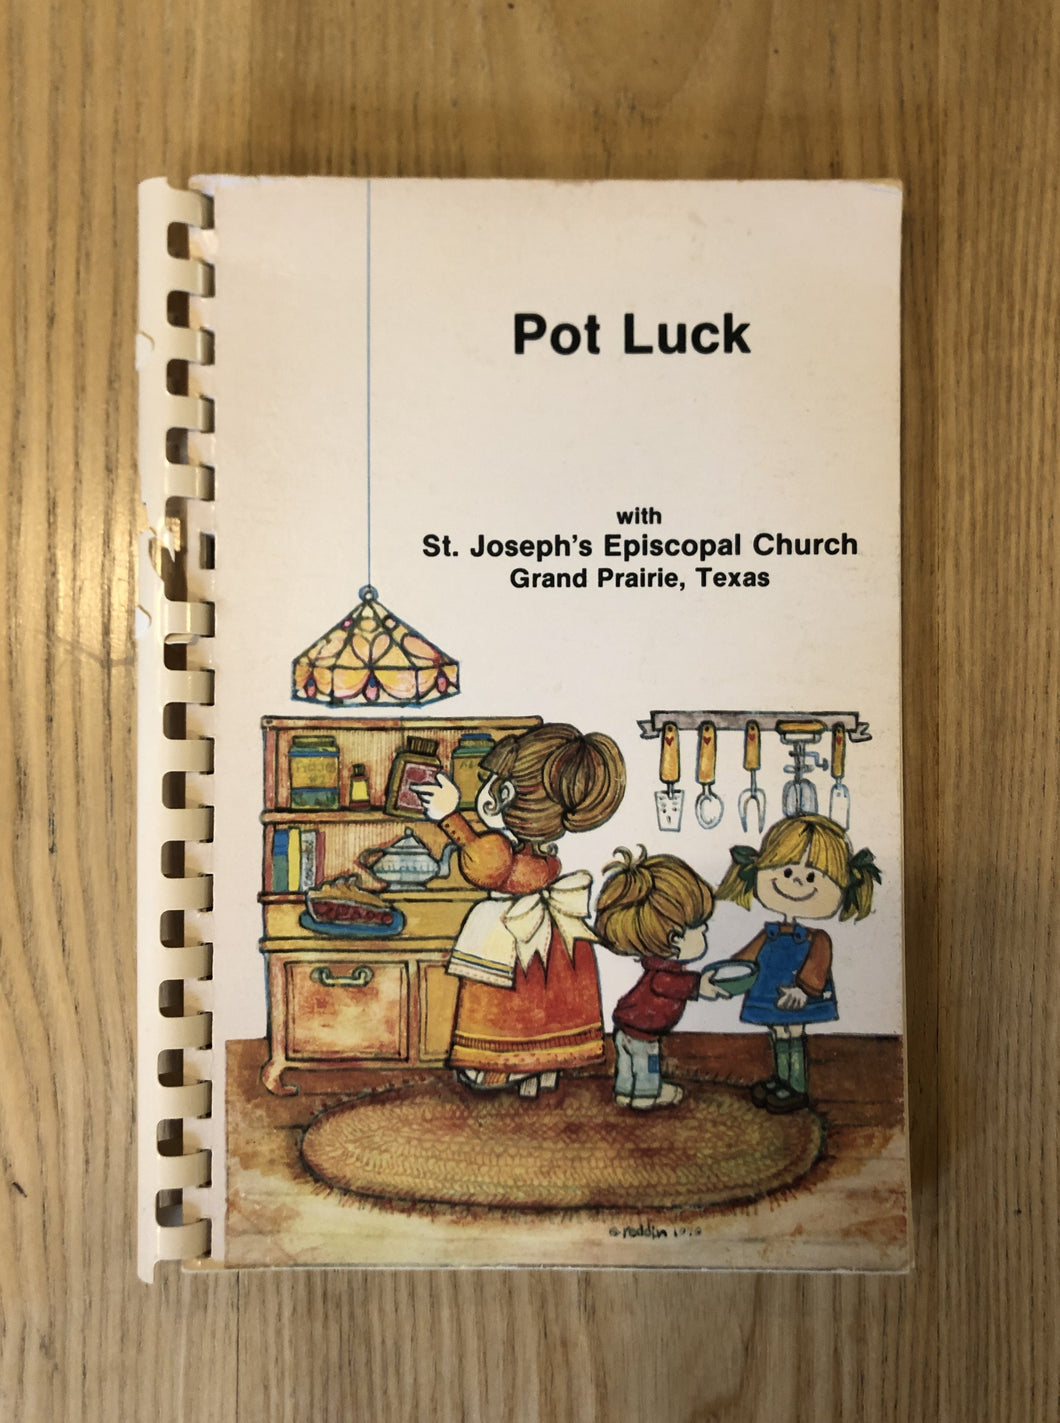 Pot Luck with St. Joseph's Episcopal Church, Grand Prairie, Texas